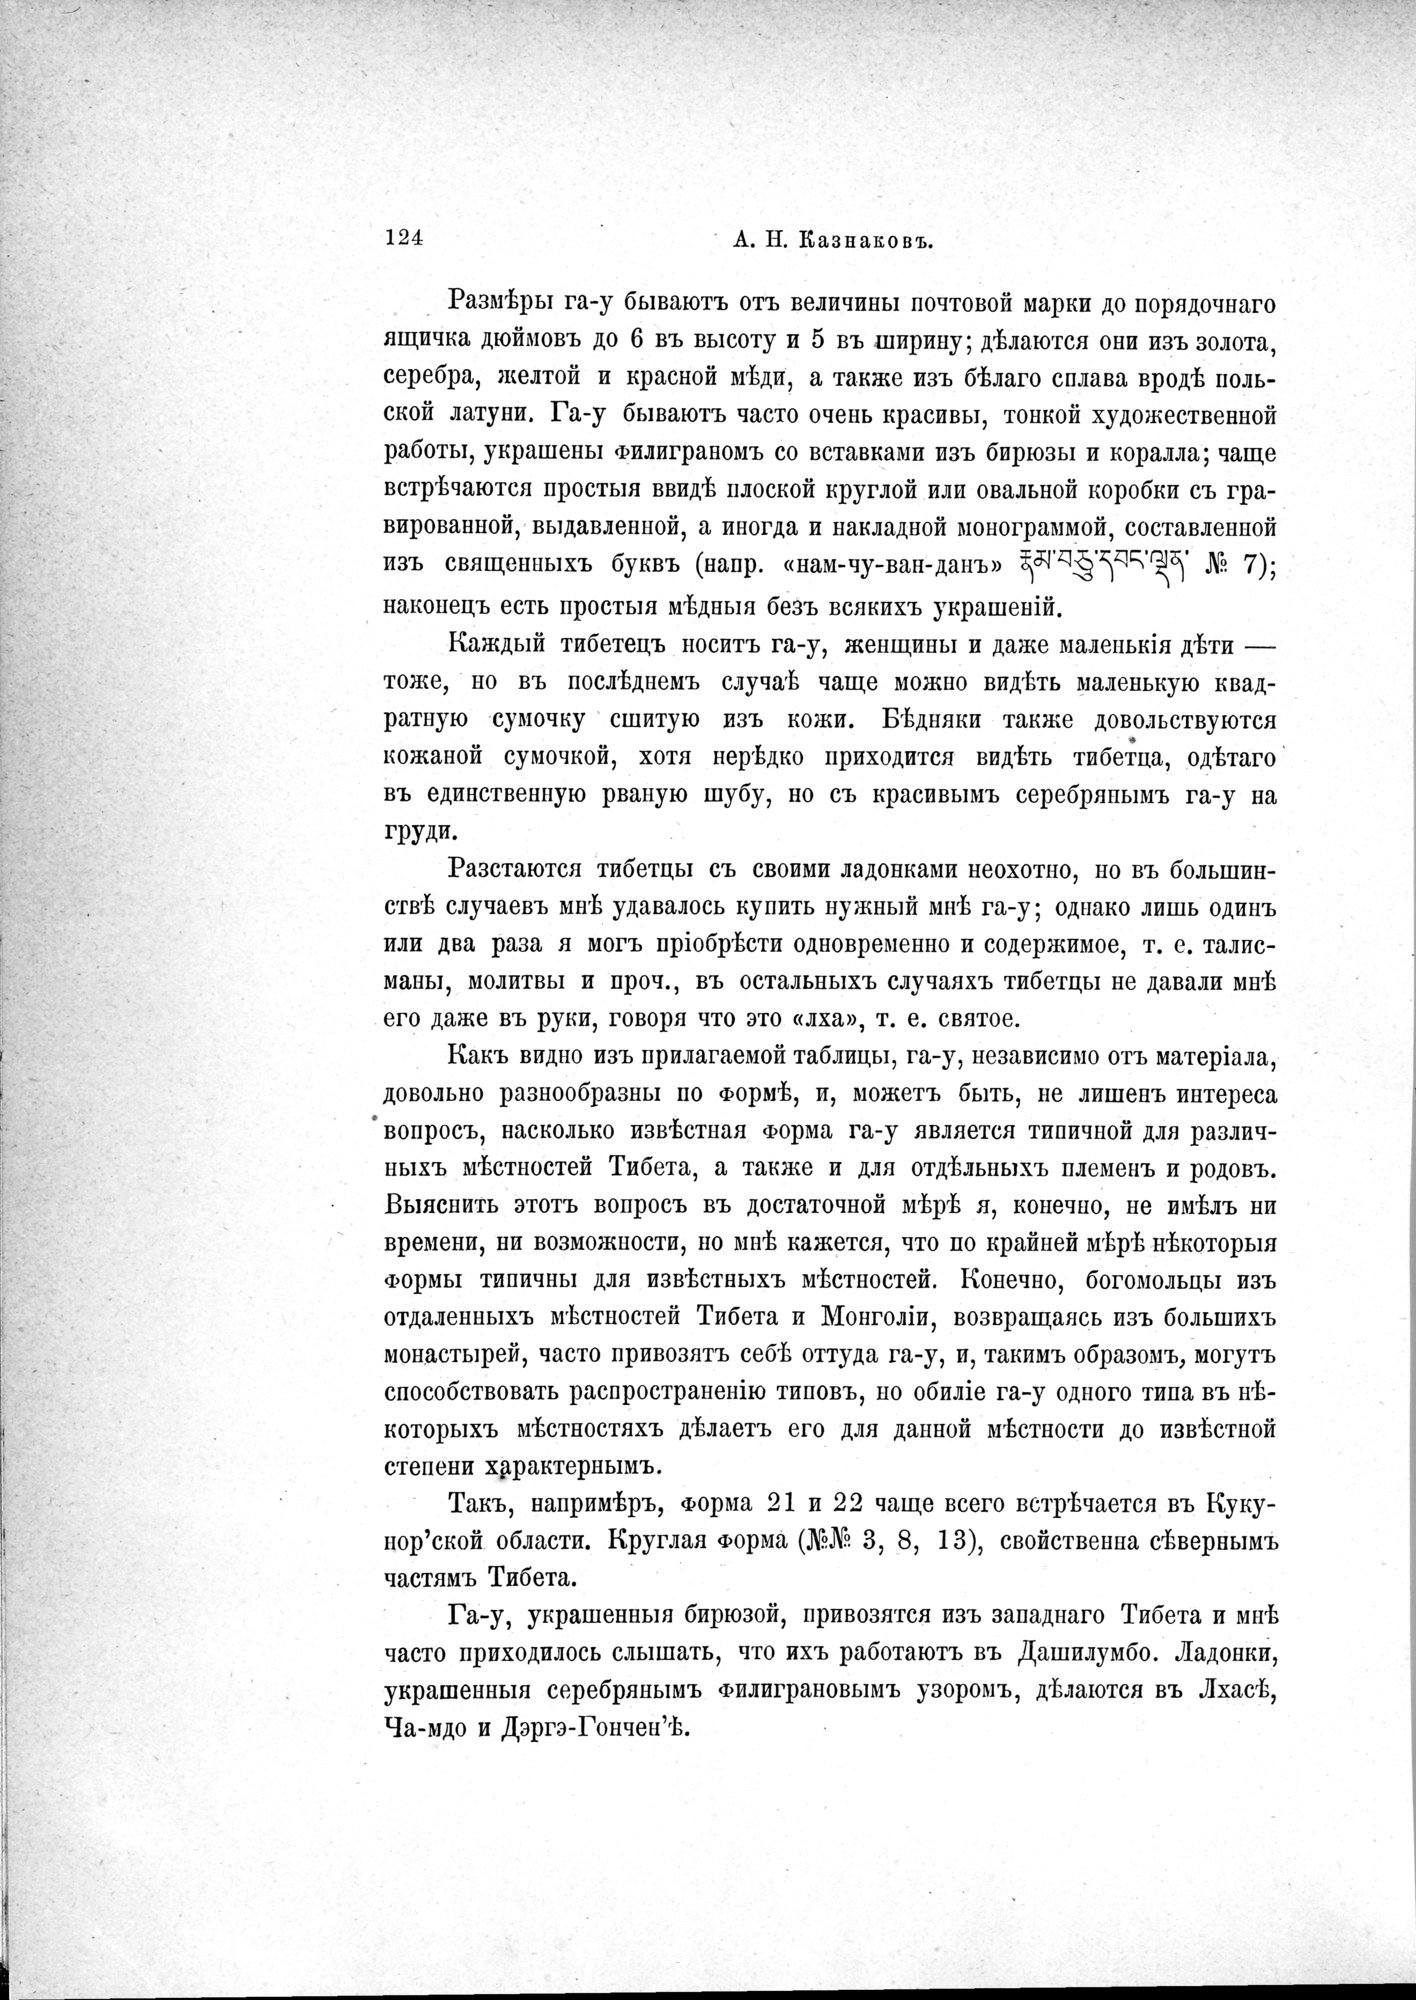 Mongoliia i Kam : vol.3 / Page 184 (Grayscale High Resolution Image)